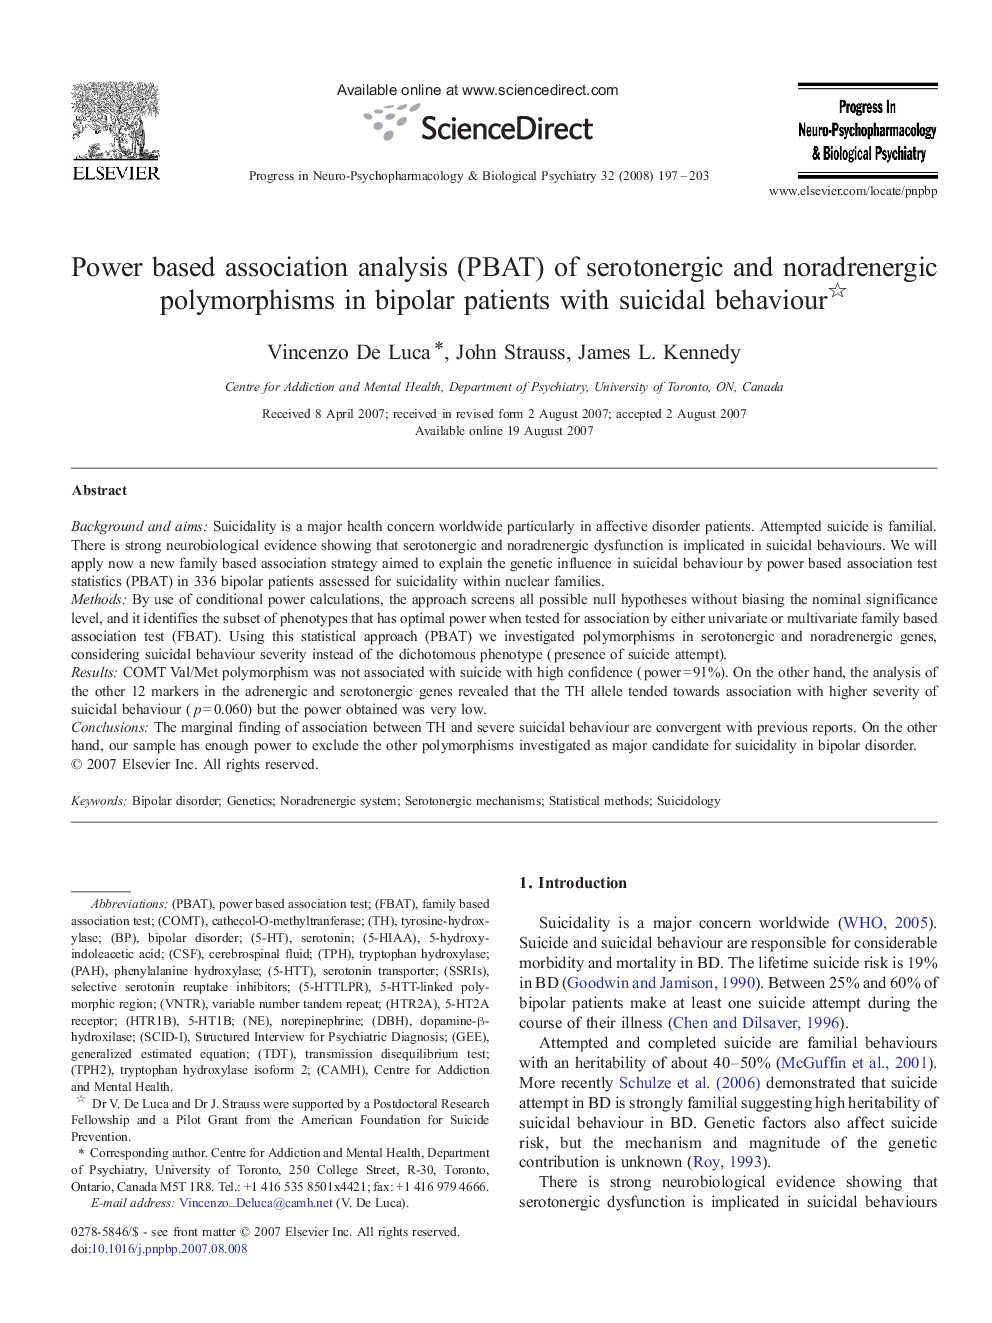 Power based association analysis (PBAT) of serotonergic and noradrenergic polymorphisms in bipolar patients with suicidal behaviour 